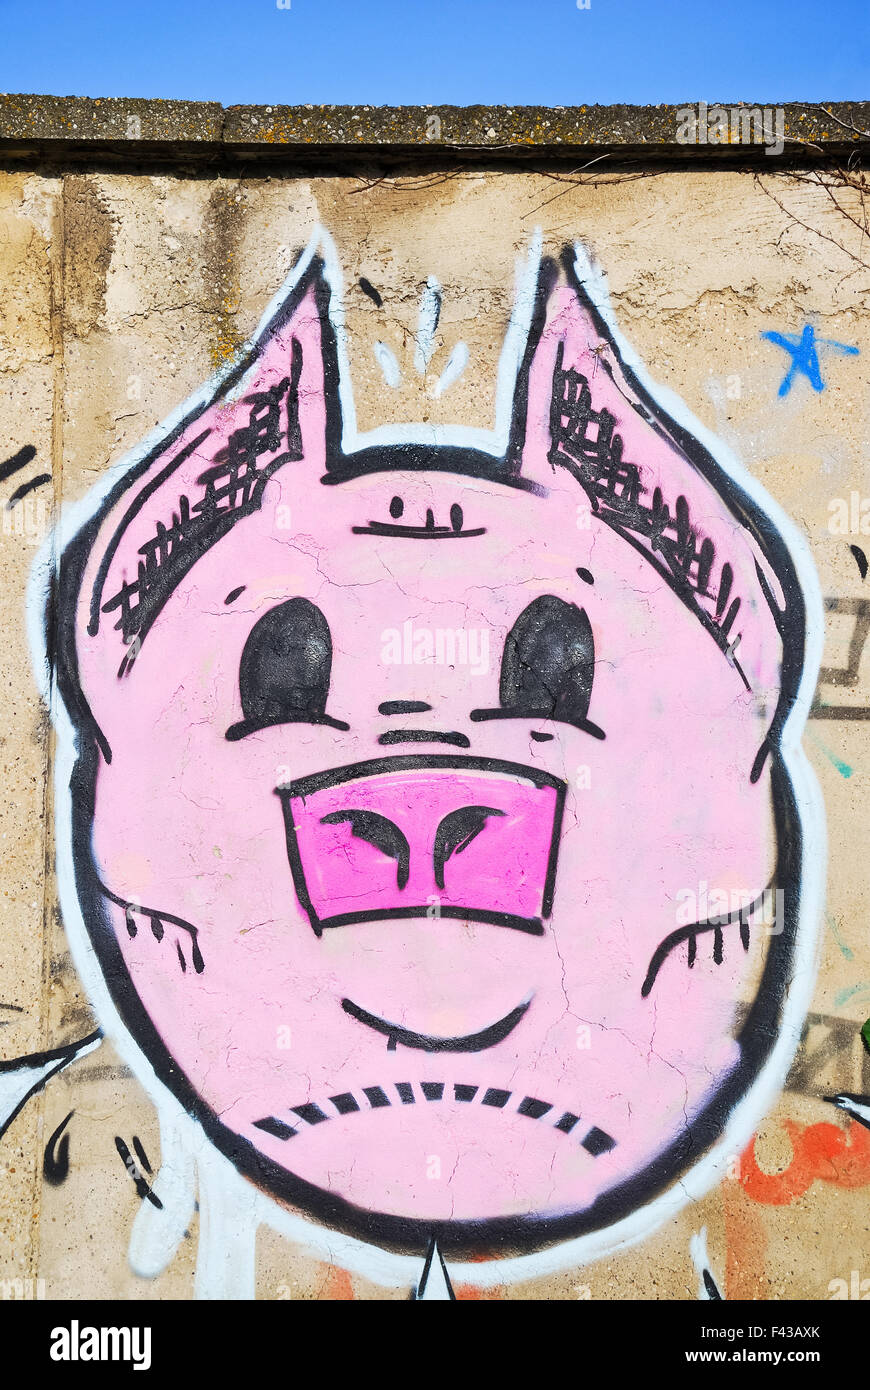 Graffiti pig's head on the wall Stock Photo